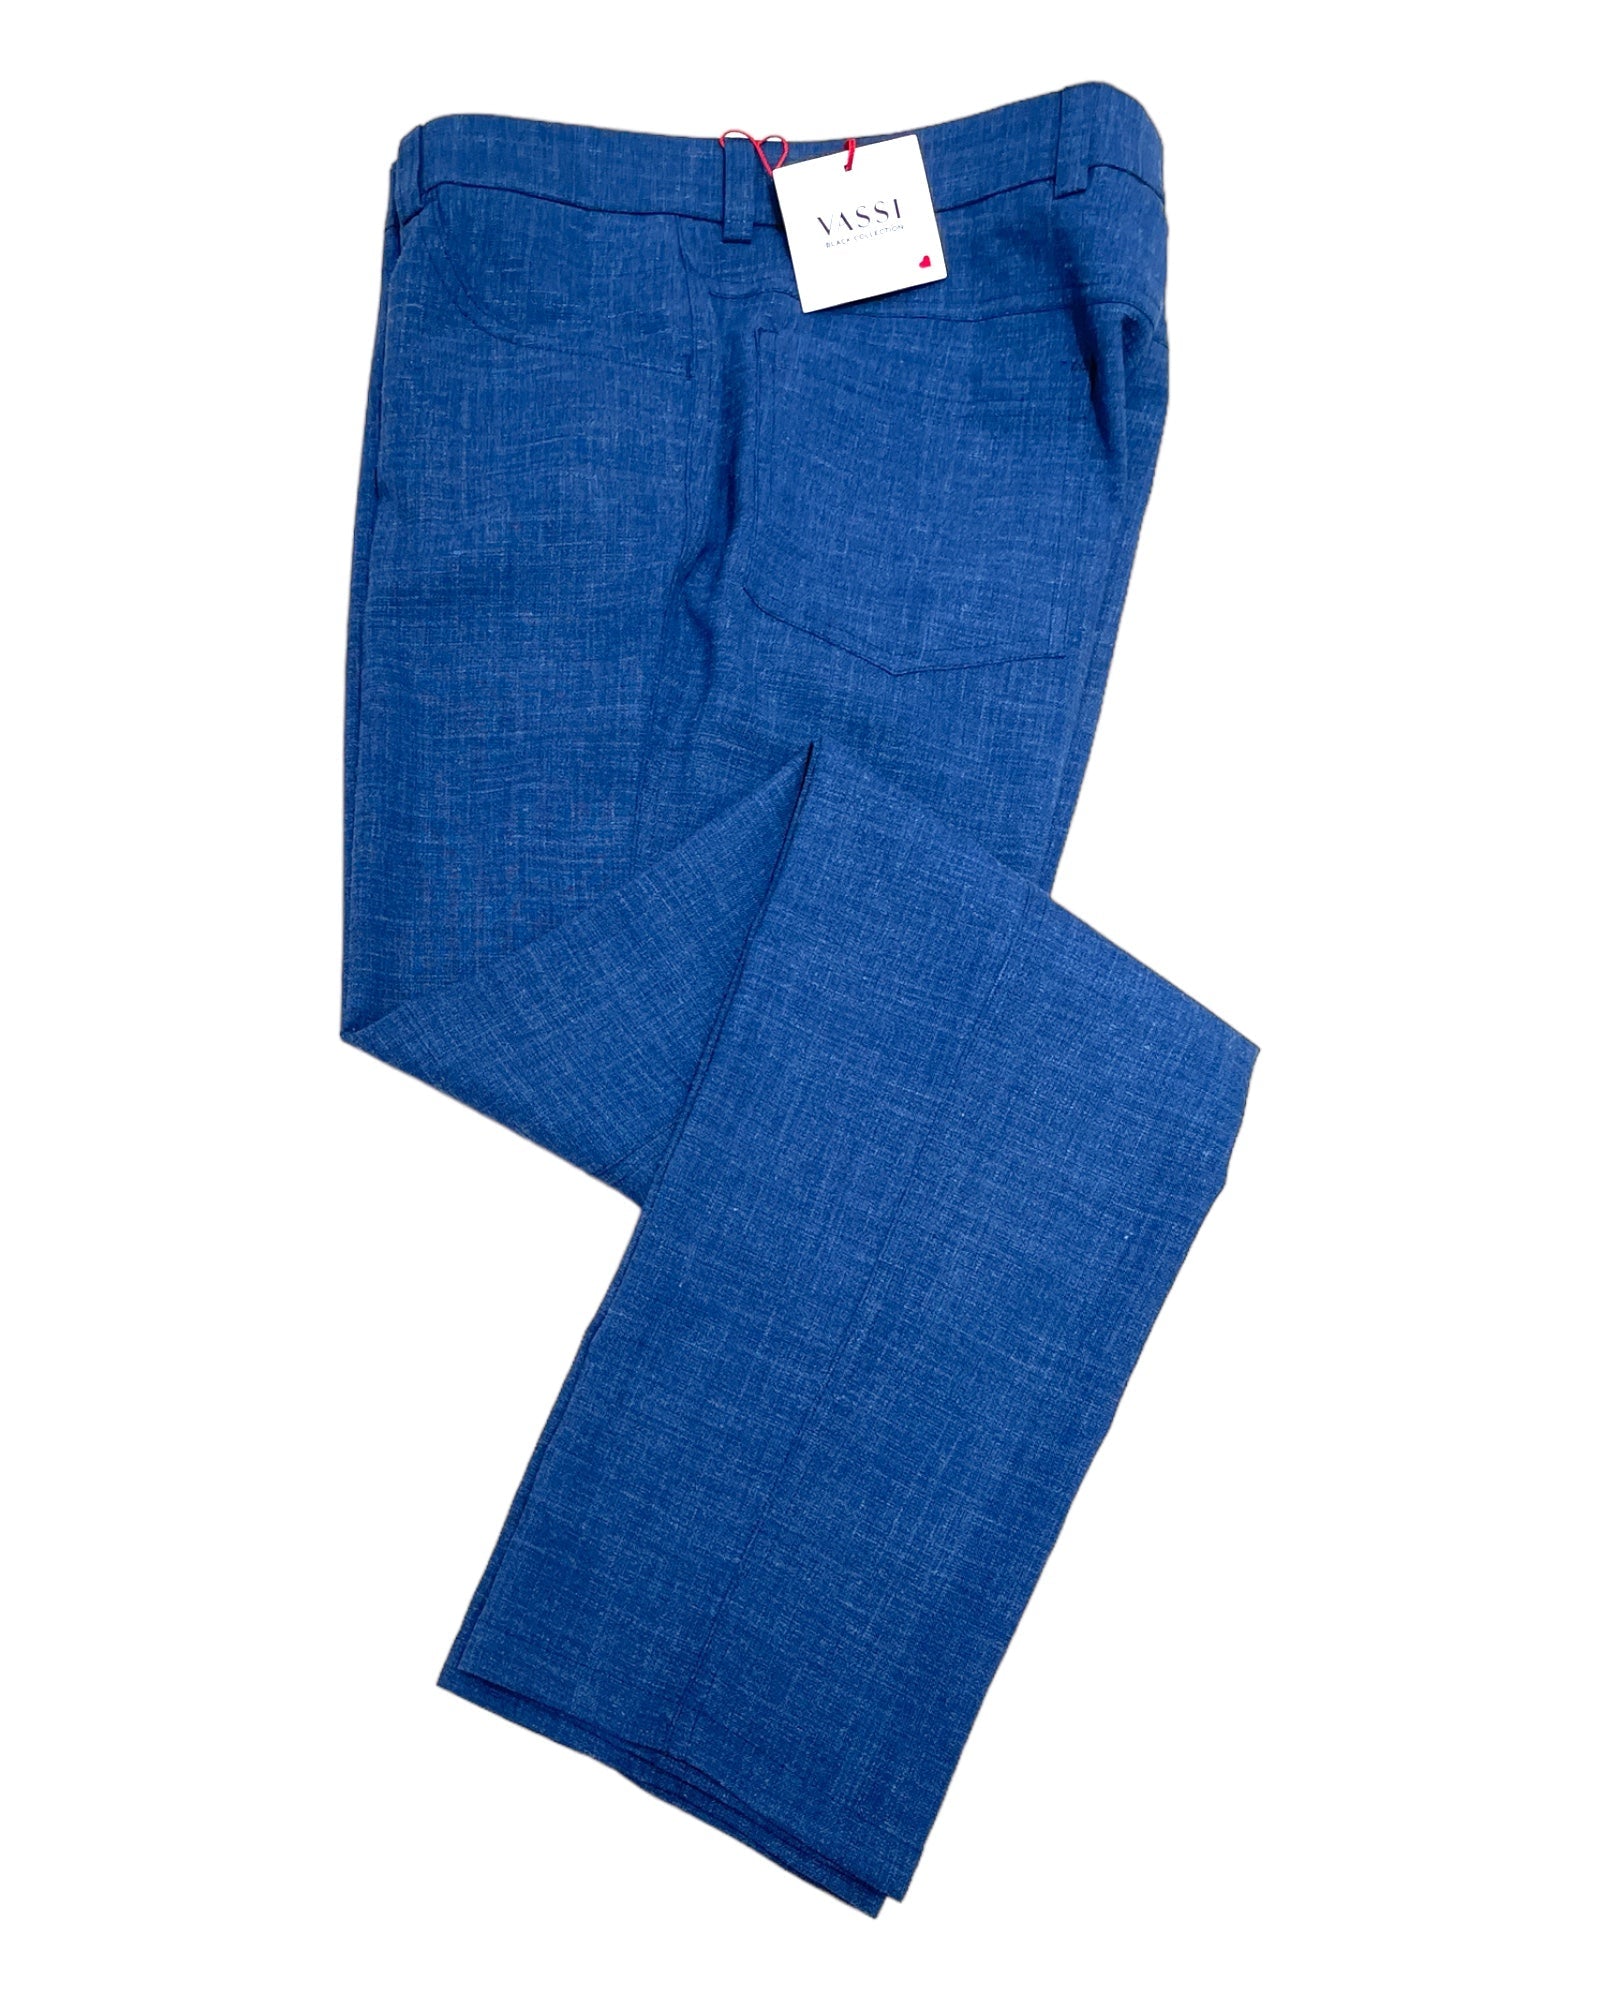 Easy Care Linen 5-Pocket Pants in Indigo Blue CASUAL PANTS32